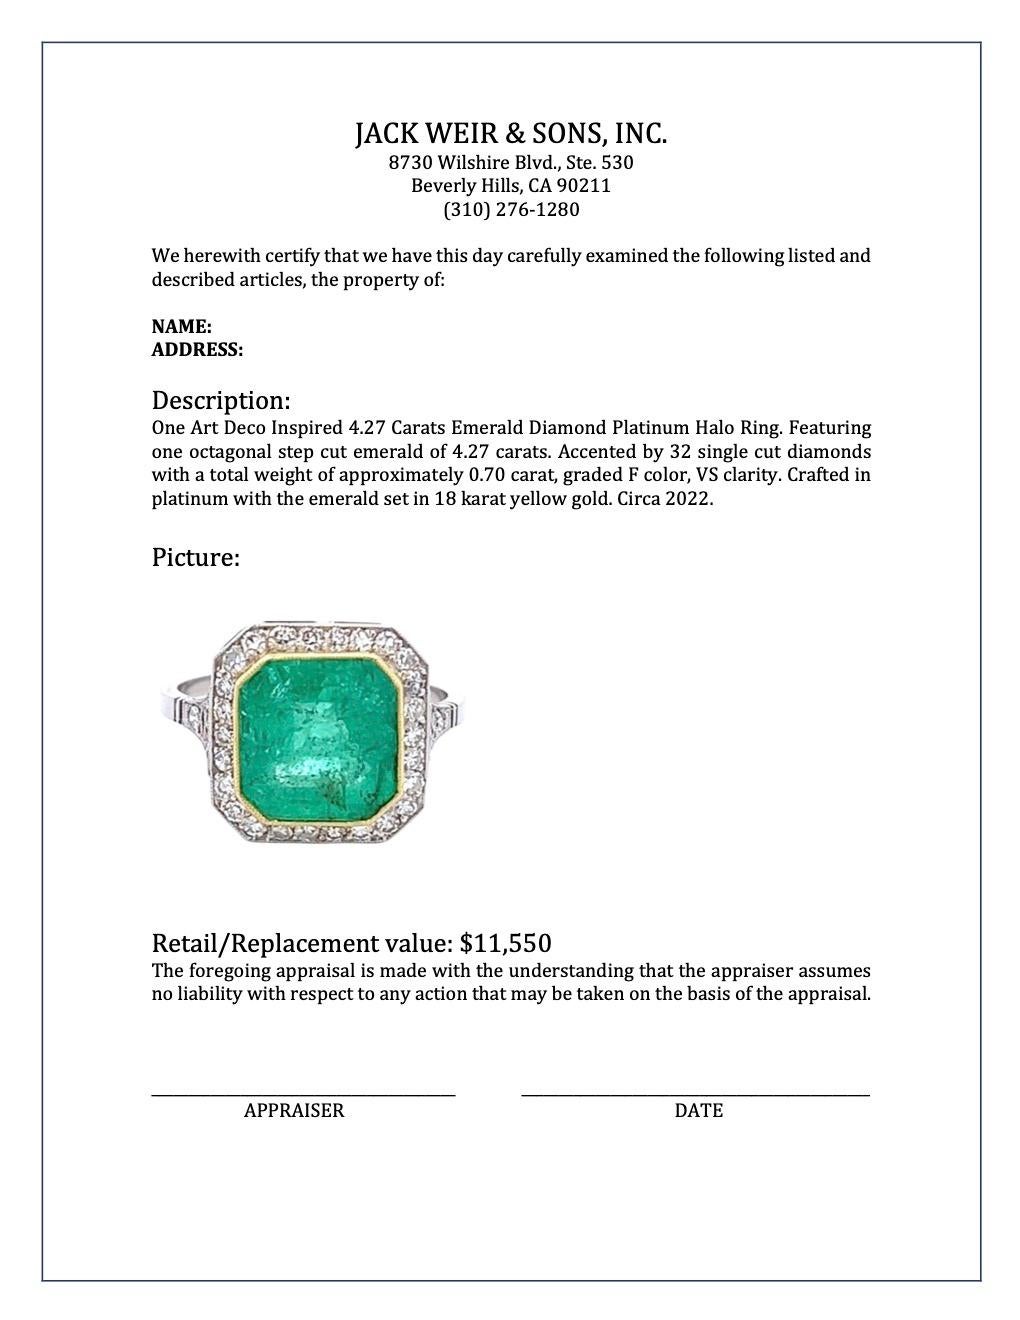 Art Deco Inspired 4.27 Carats Emerald Diamond Platinum Halo Ring 2